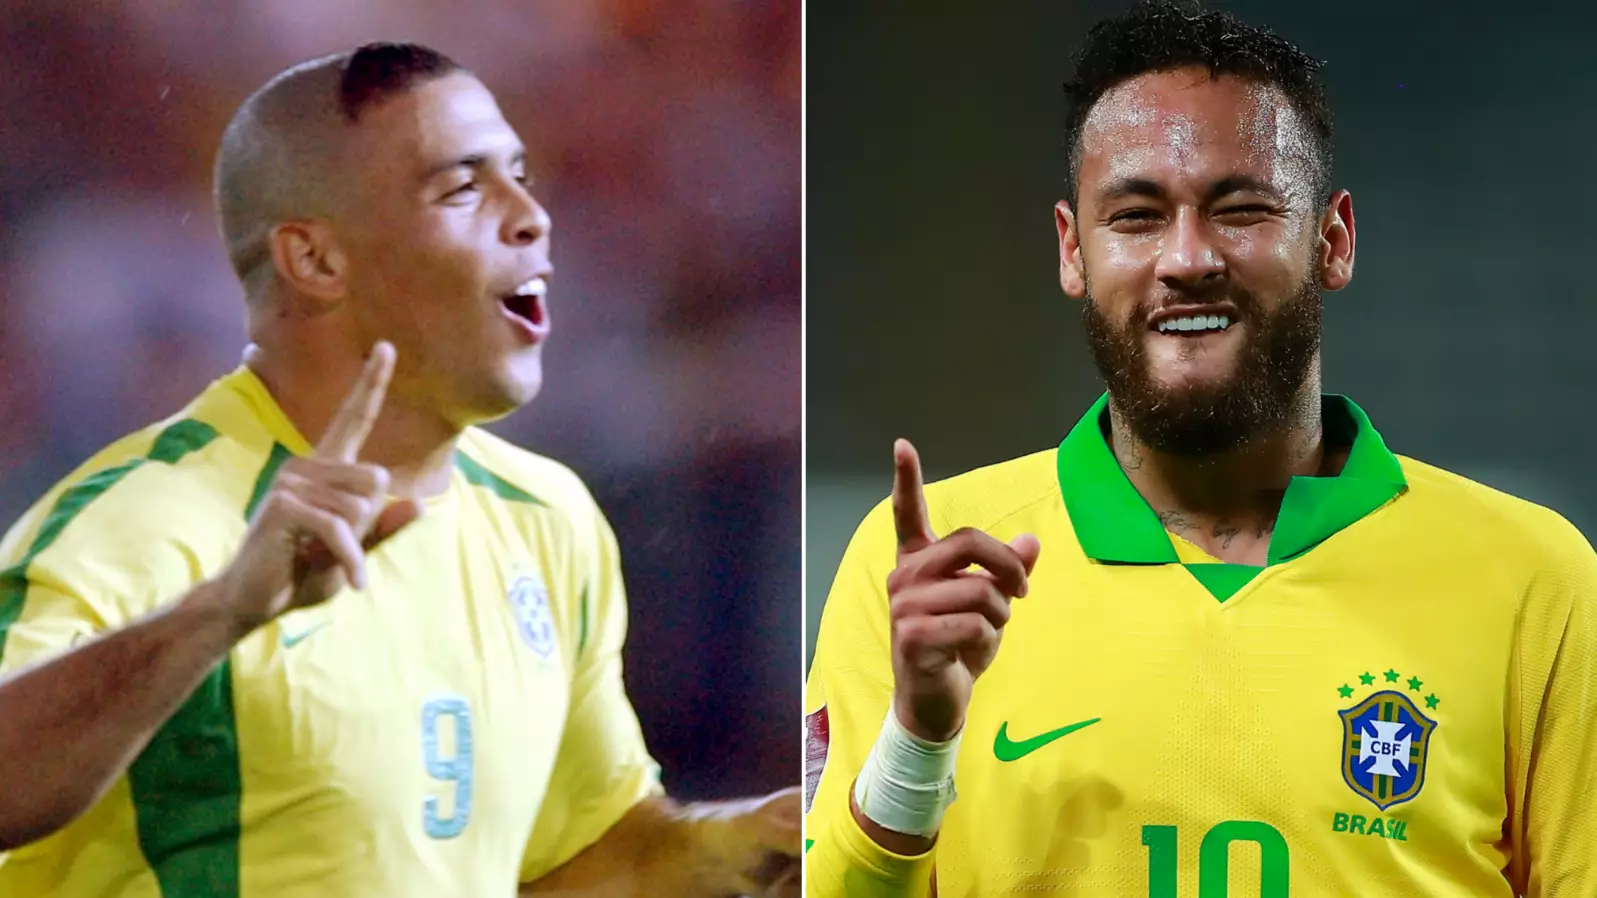 Neymar Scores Hat-Trick To Move Past Ronaldo Nazario In Brazil Top Scorers List